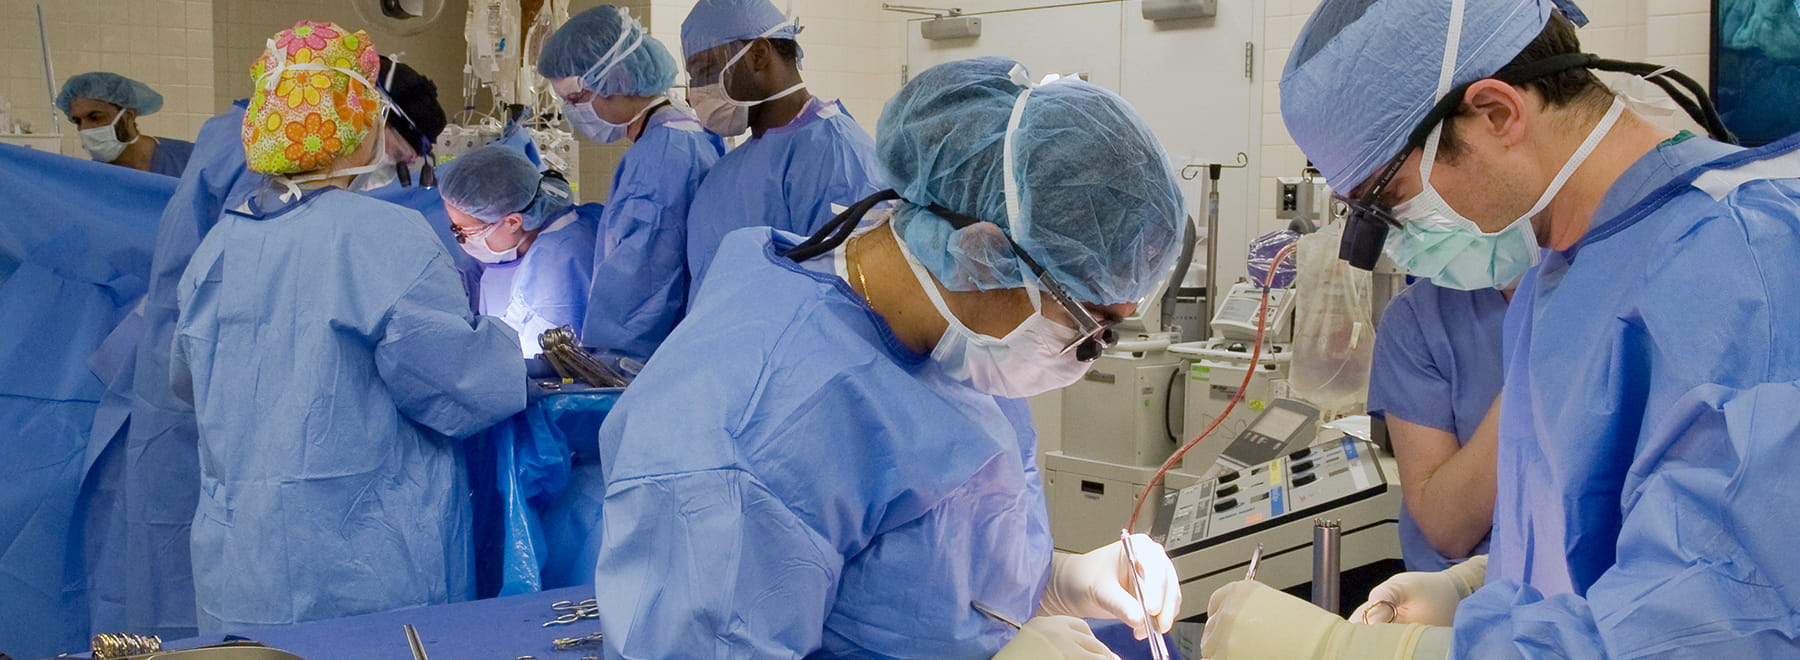 Mississippi Center For Plastic Surgery davardesigns